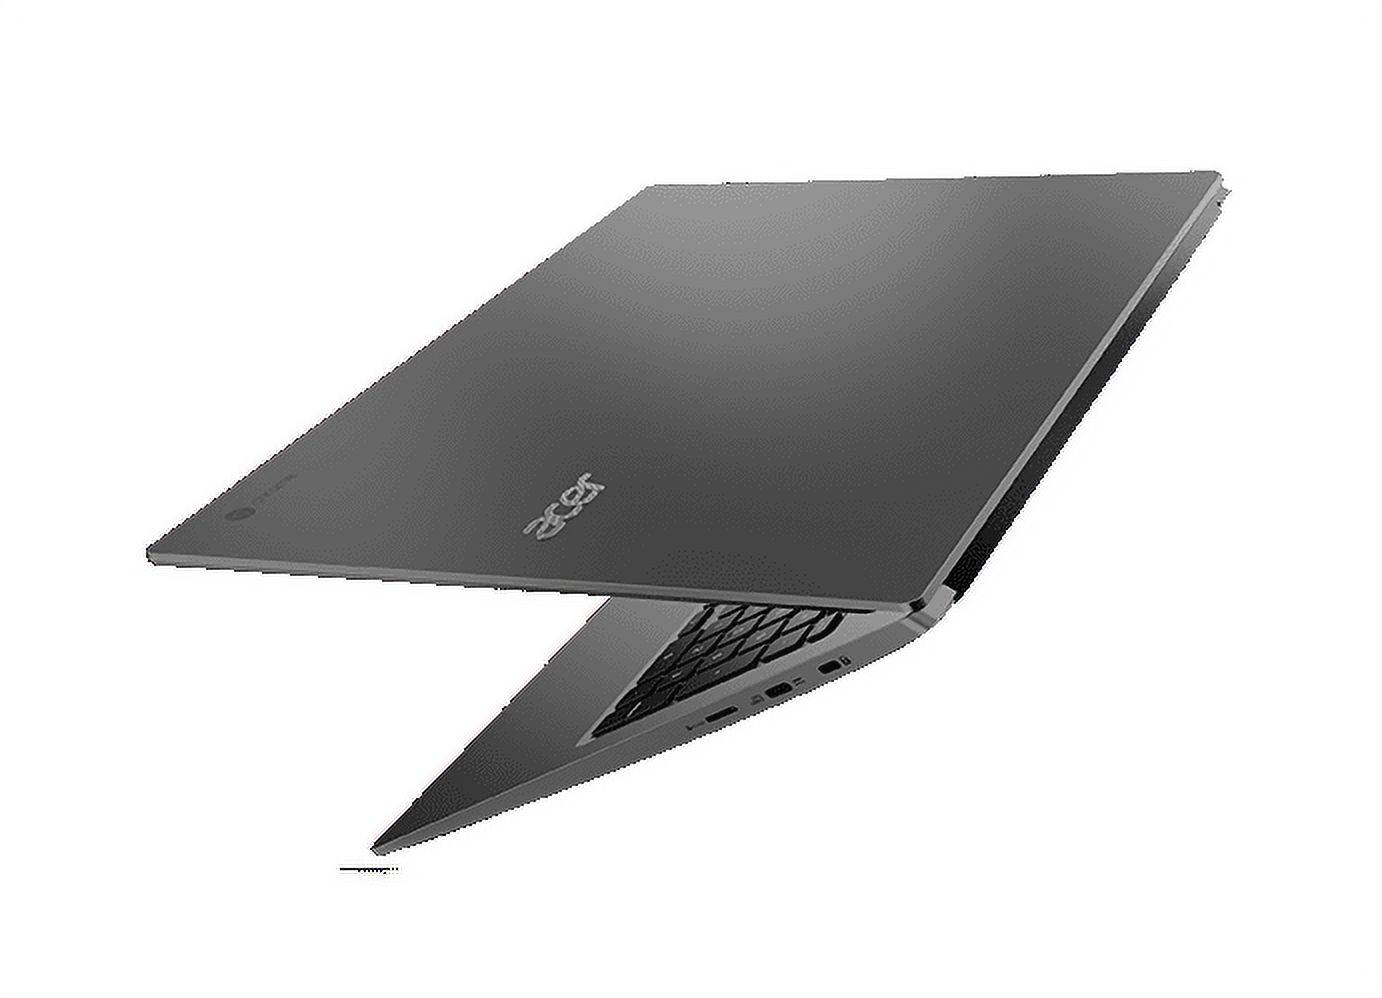 Acer 15.6" FHD Touchscreen Chromebook, Intel Core i3, 4GB RAM, 128GB HD, Chrome OS, Gray, 81JW0001US - image 2 of 6